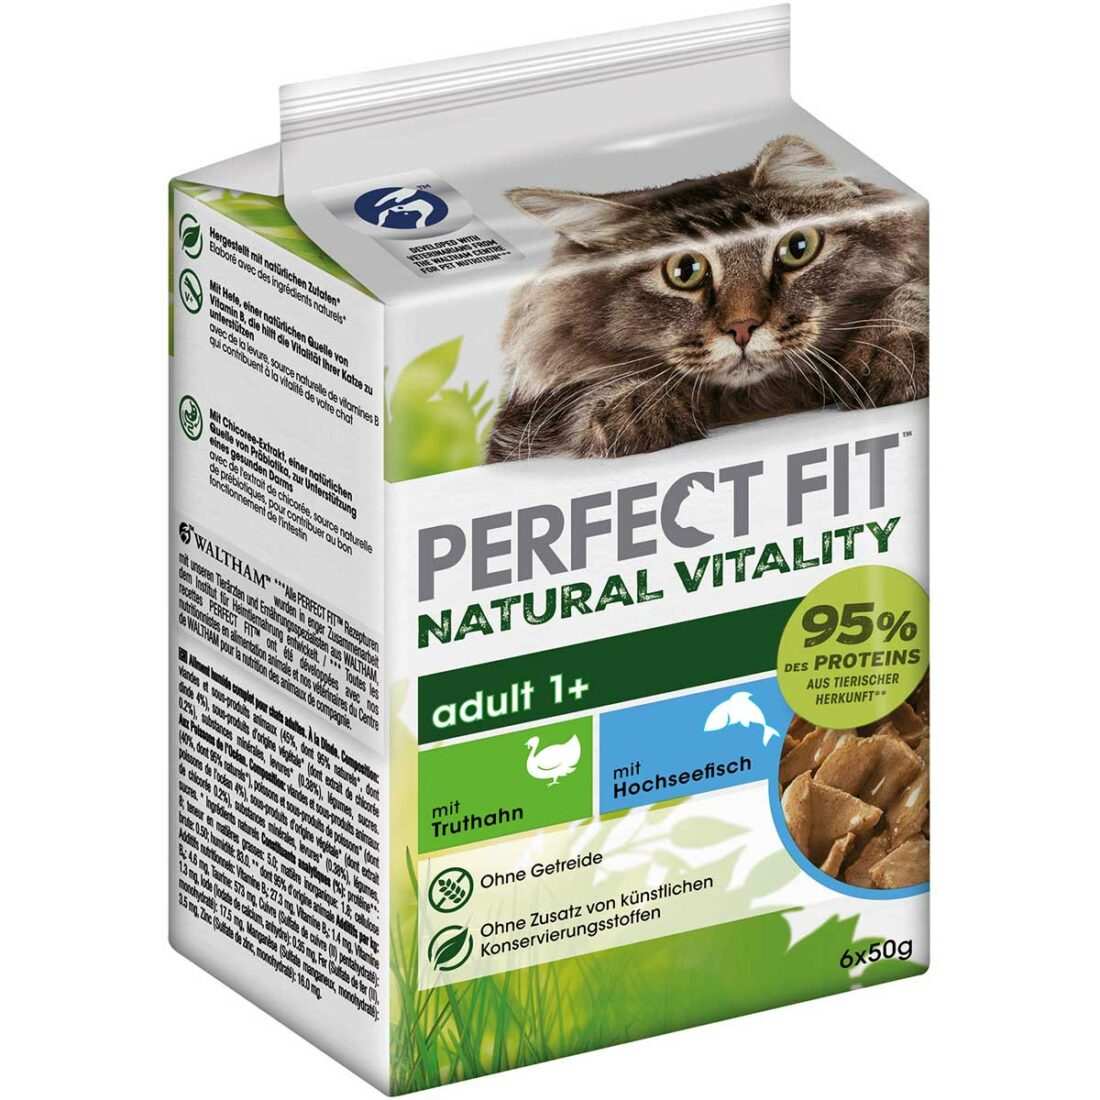 Krmivo pro kočky PERFECT FIT Natural Vitality Adult 1+ krocan